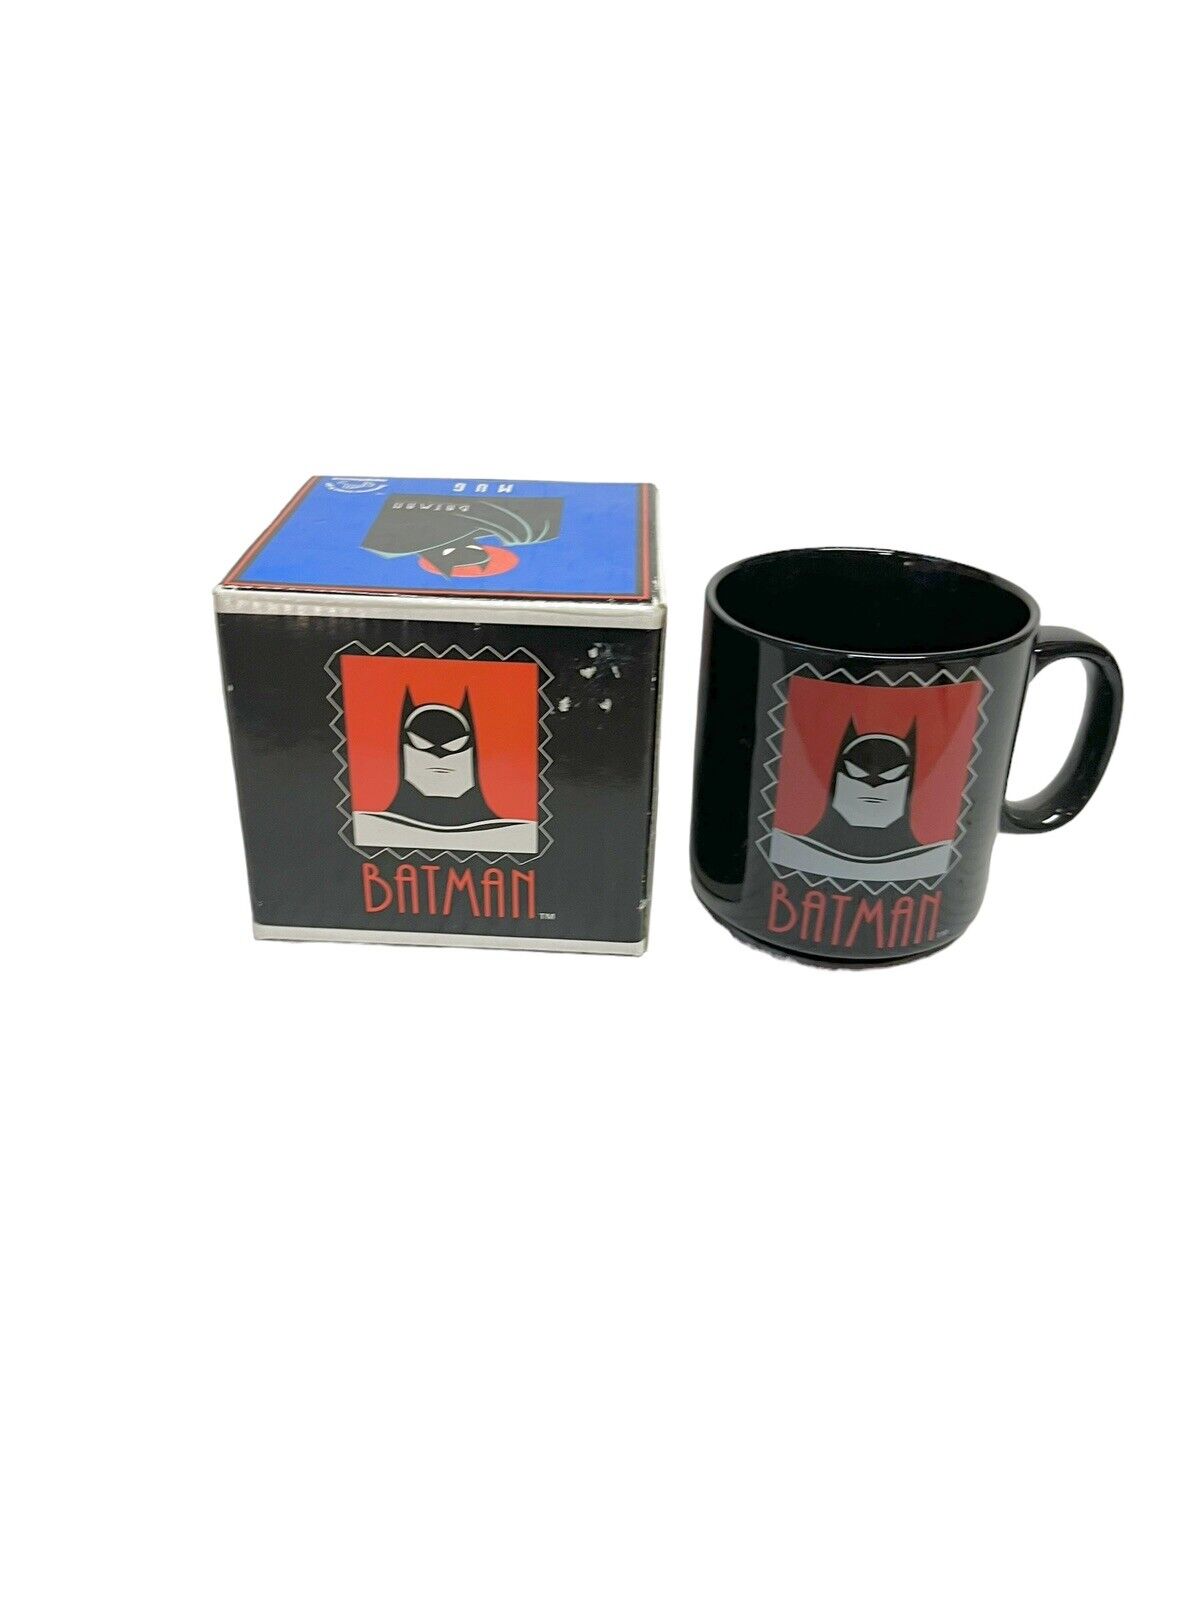 Batman: The Animated Series Coffee Mug (Applause, 1992) With Original Box